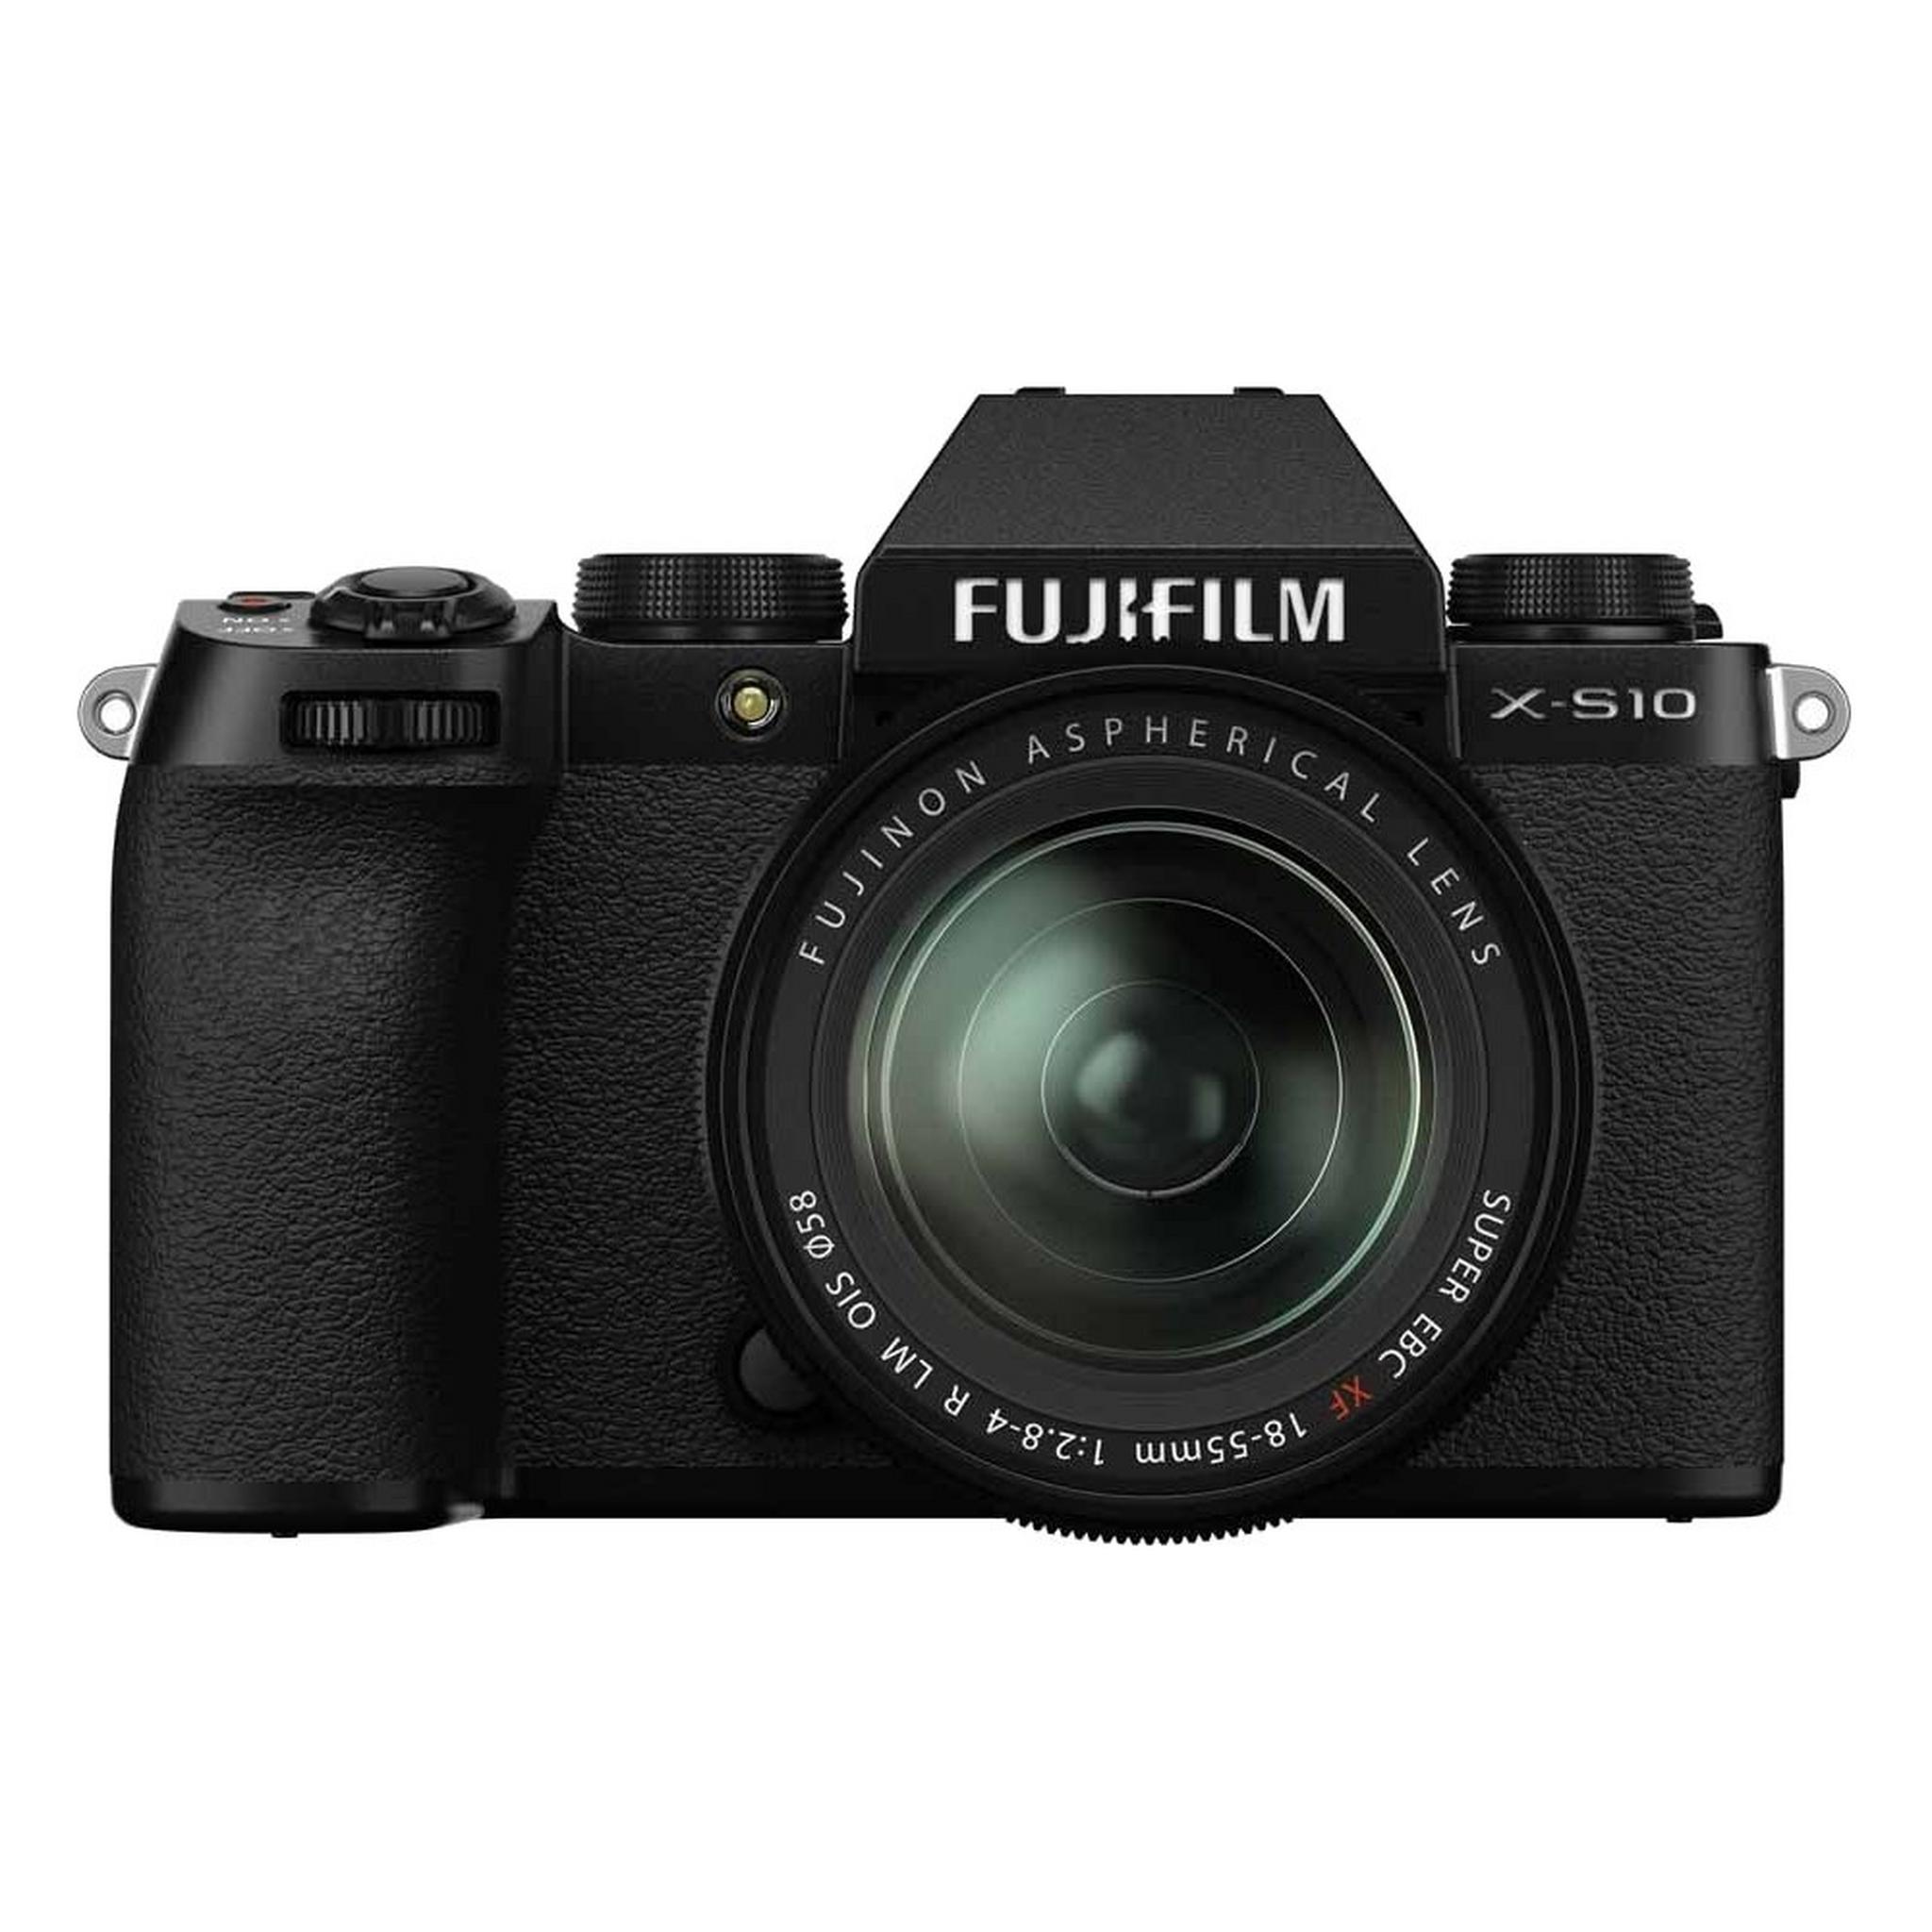 Fujfilm X-S10 Mirrorless Digital Camera with 18-55mm Lens